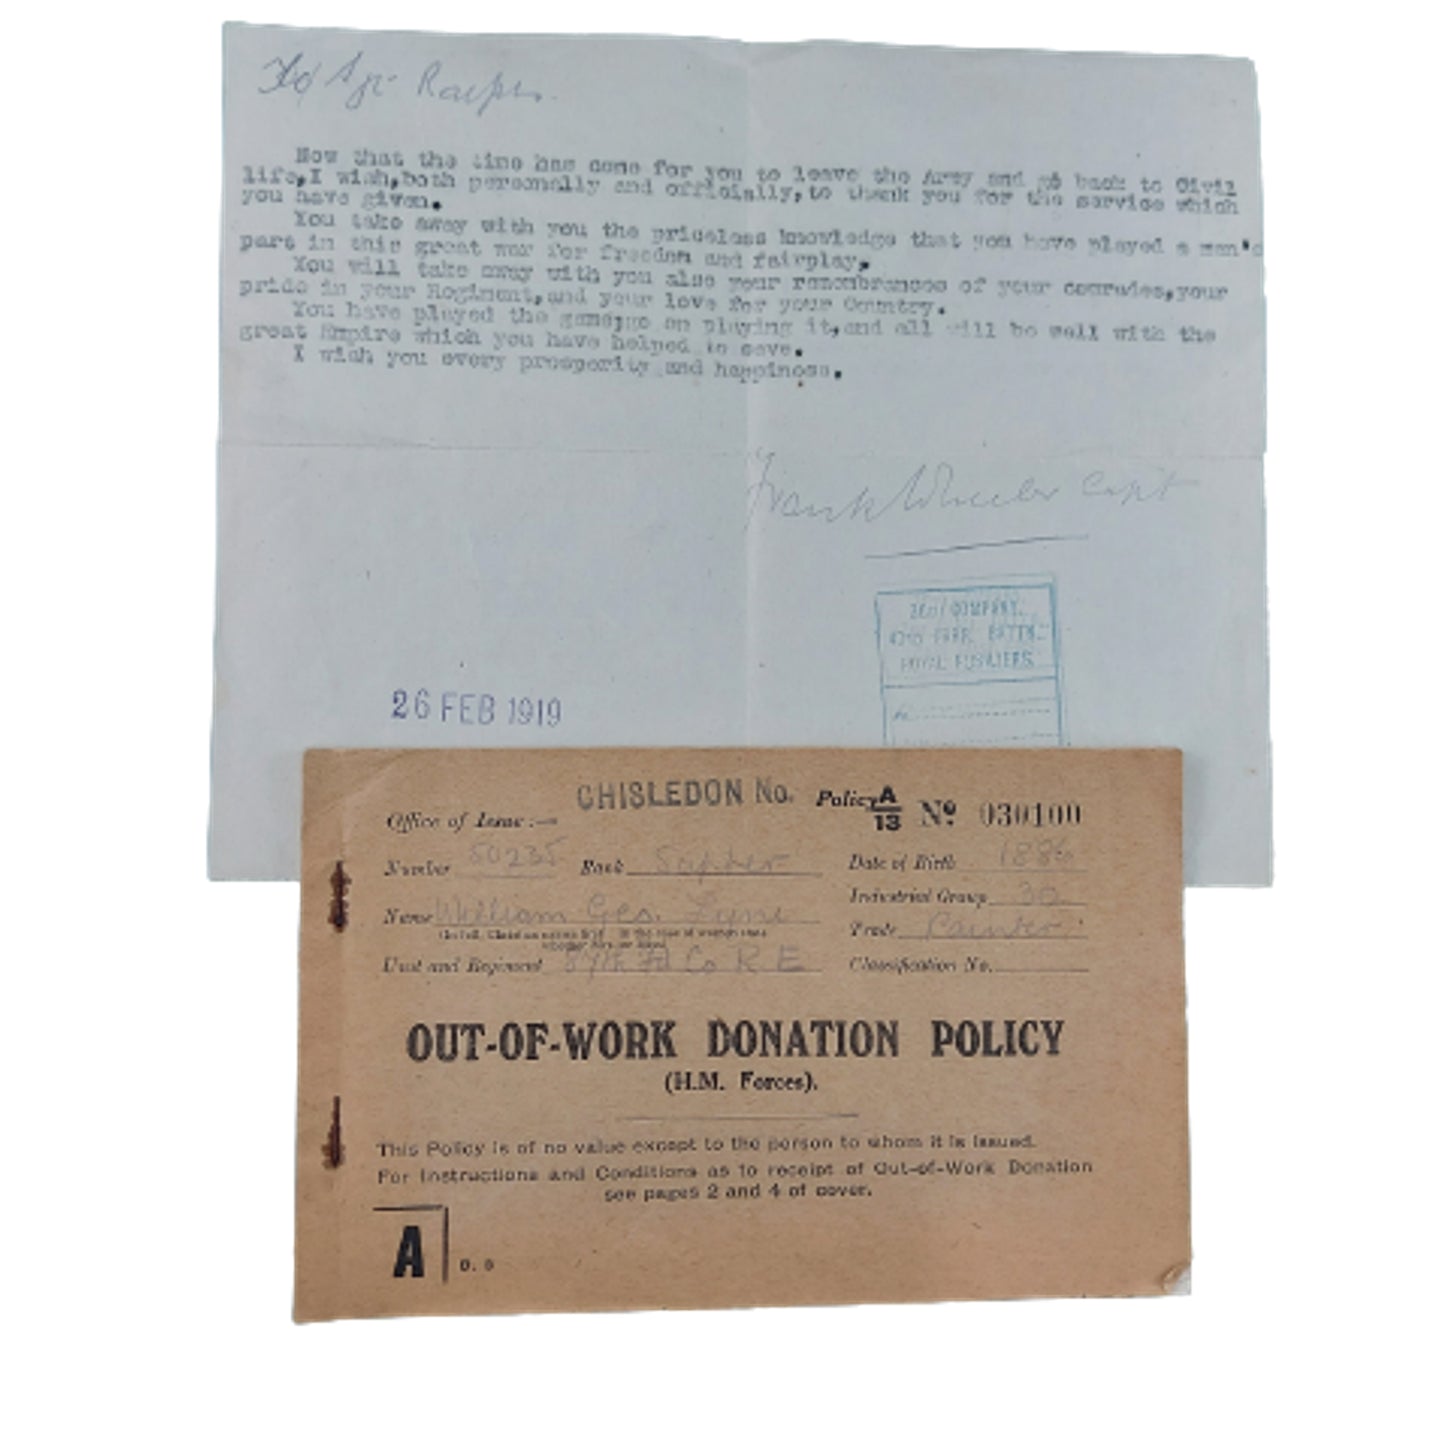 WW1 Paperwork To 50235 Spr. W. Lyne 87th Field Company Royal Engineers